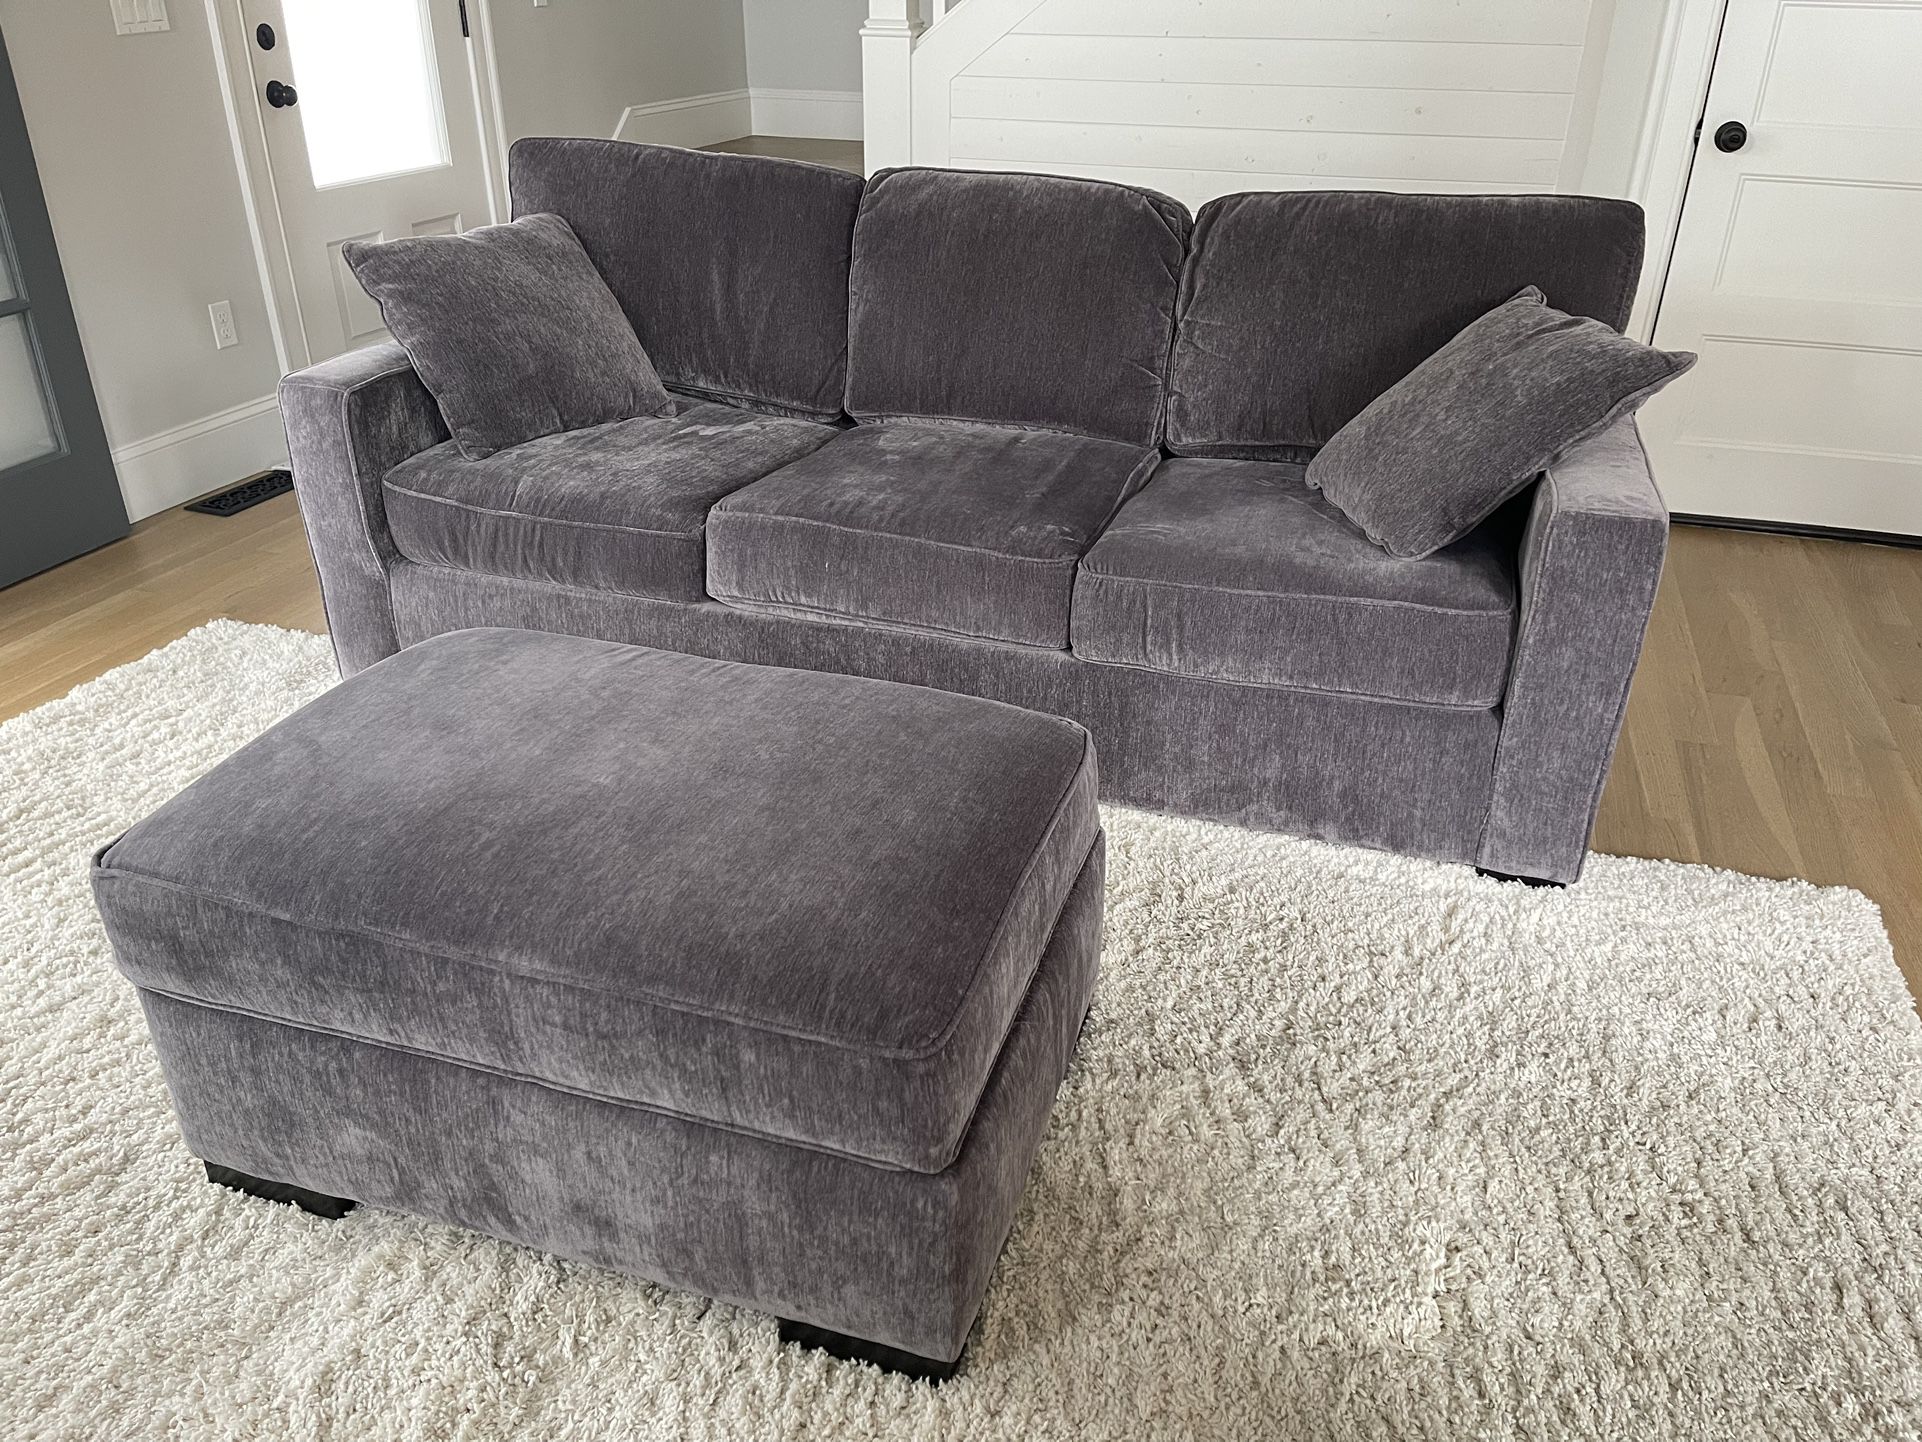 Gorgeous Custom Sofa From Macy’s